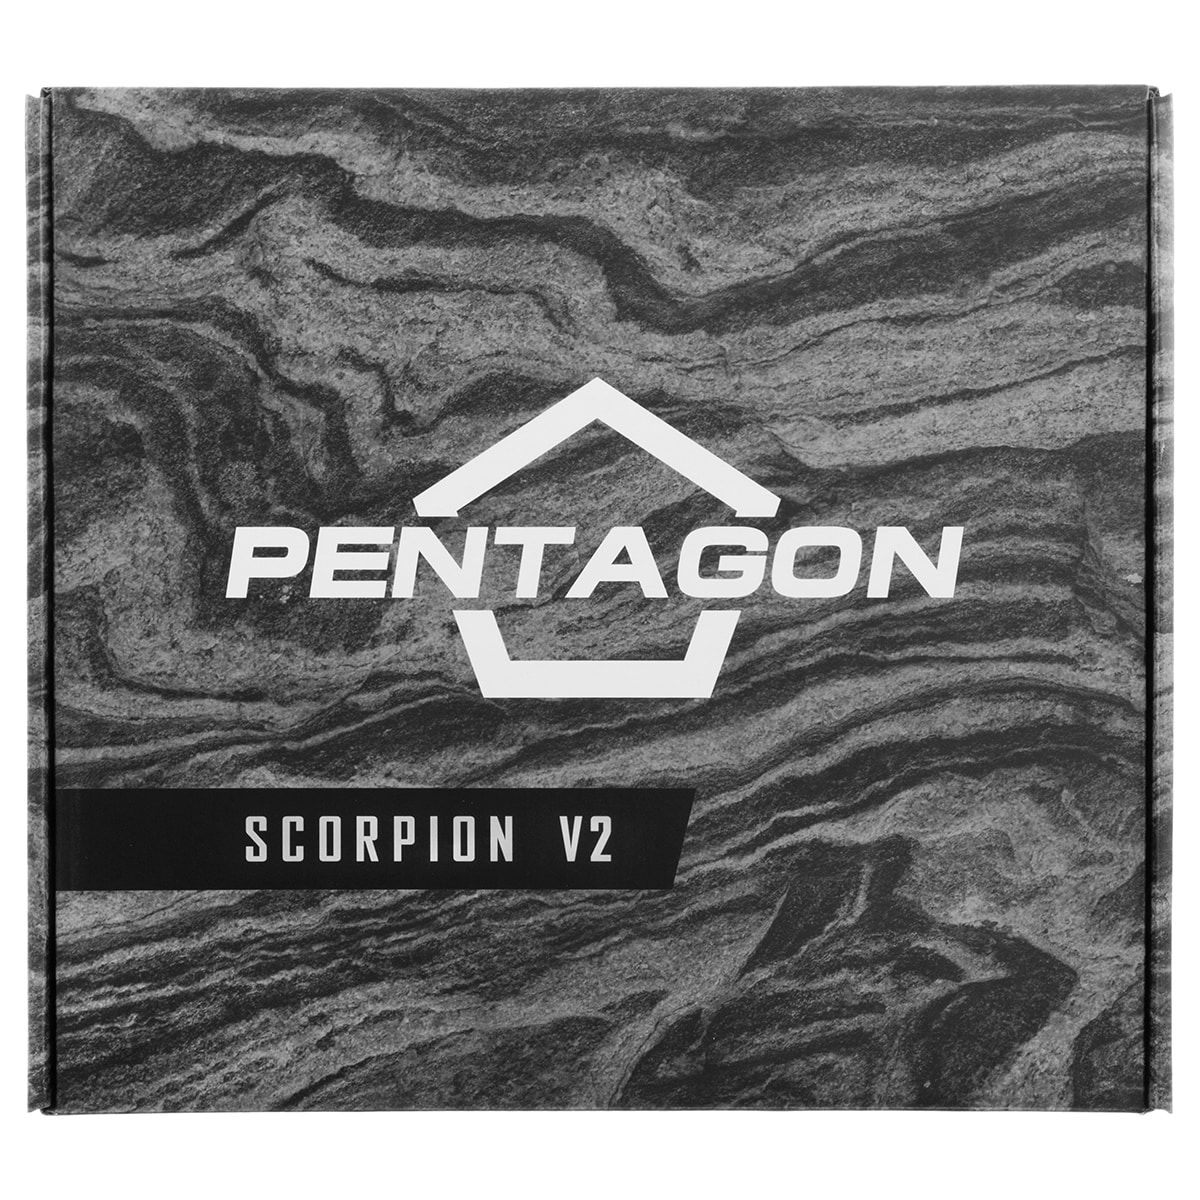 Buty Pentagon Scorpion V2 8